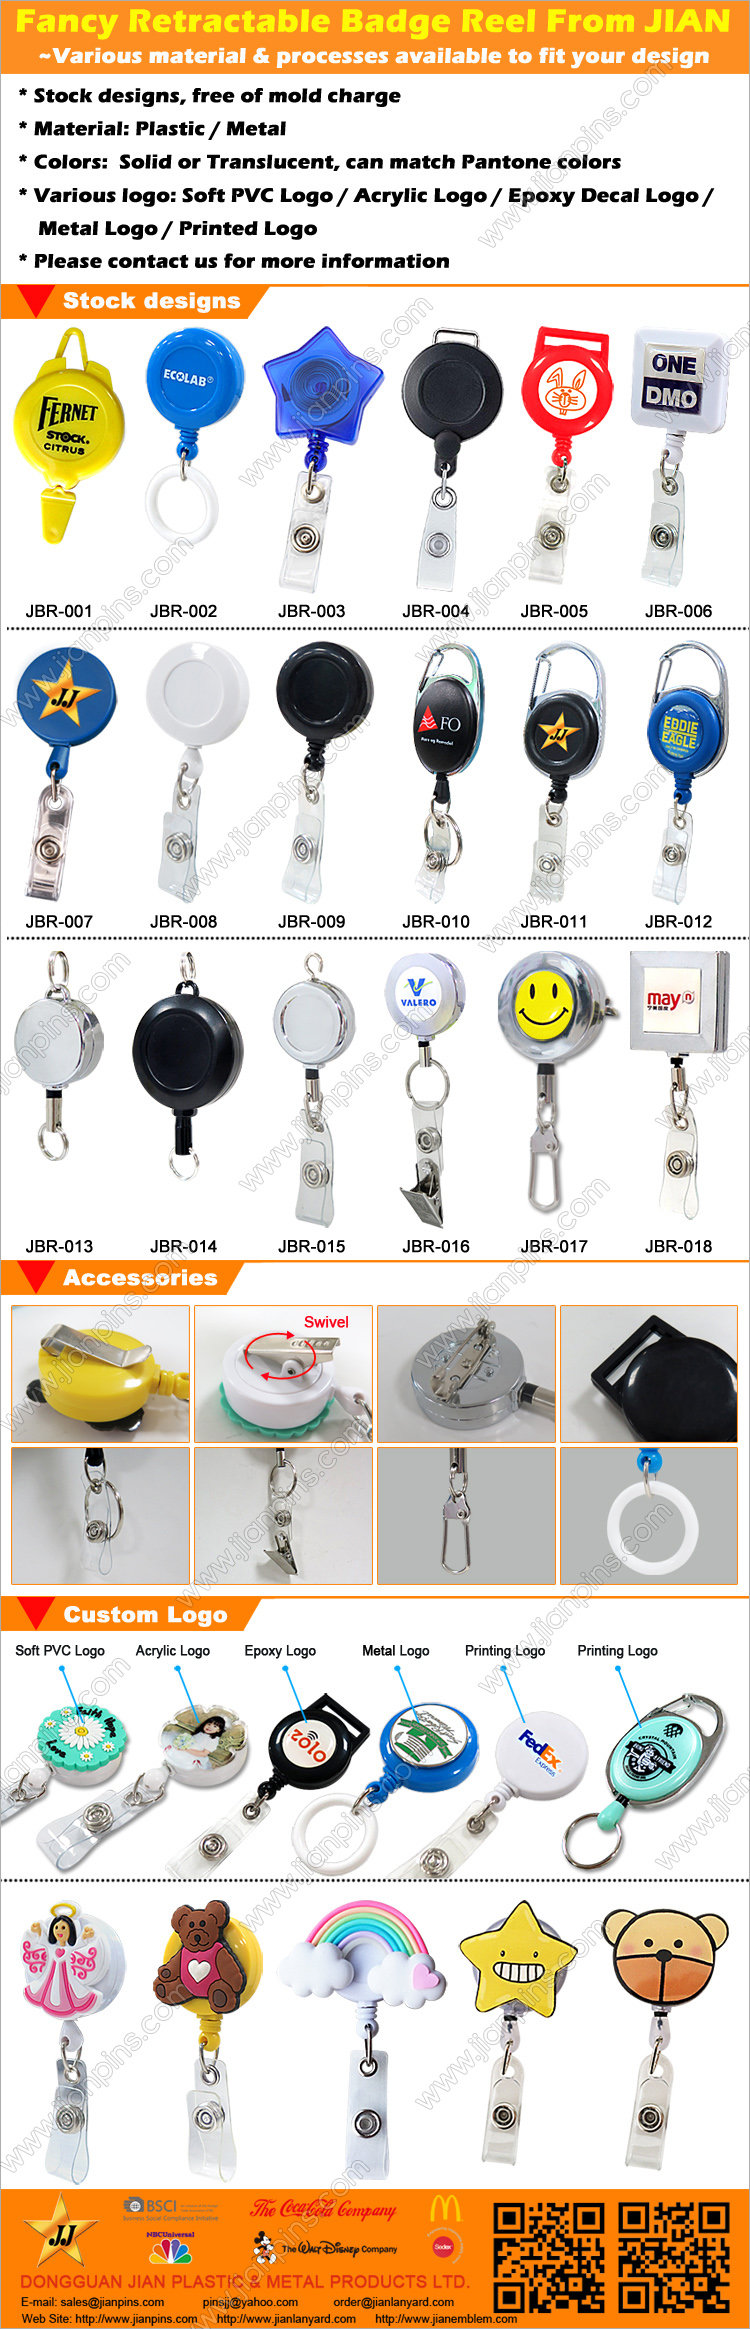 Various Stock Designs of Fancy Retractable Badge Reel From JIAN